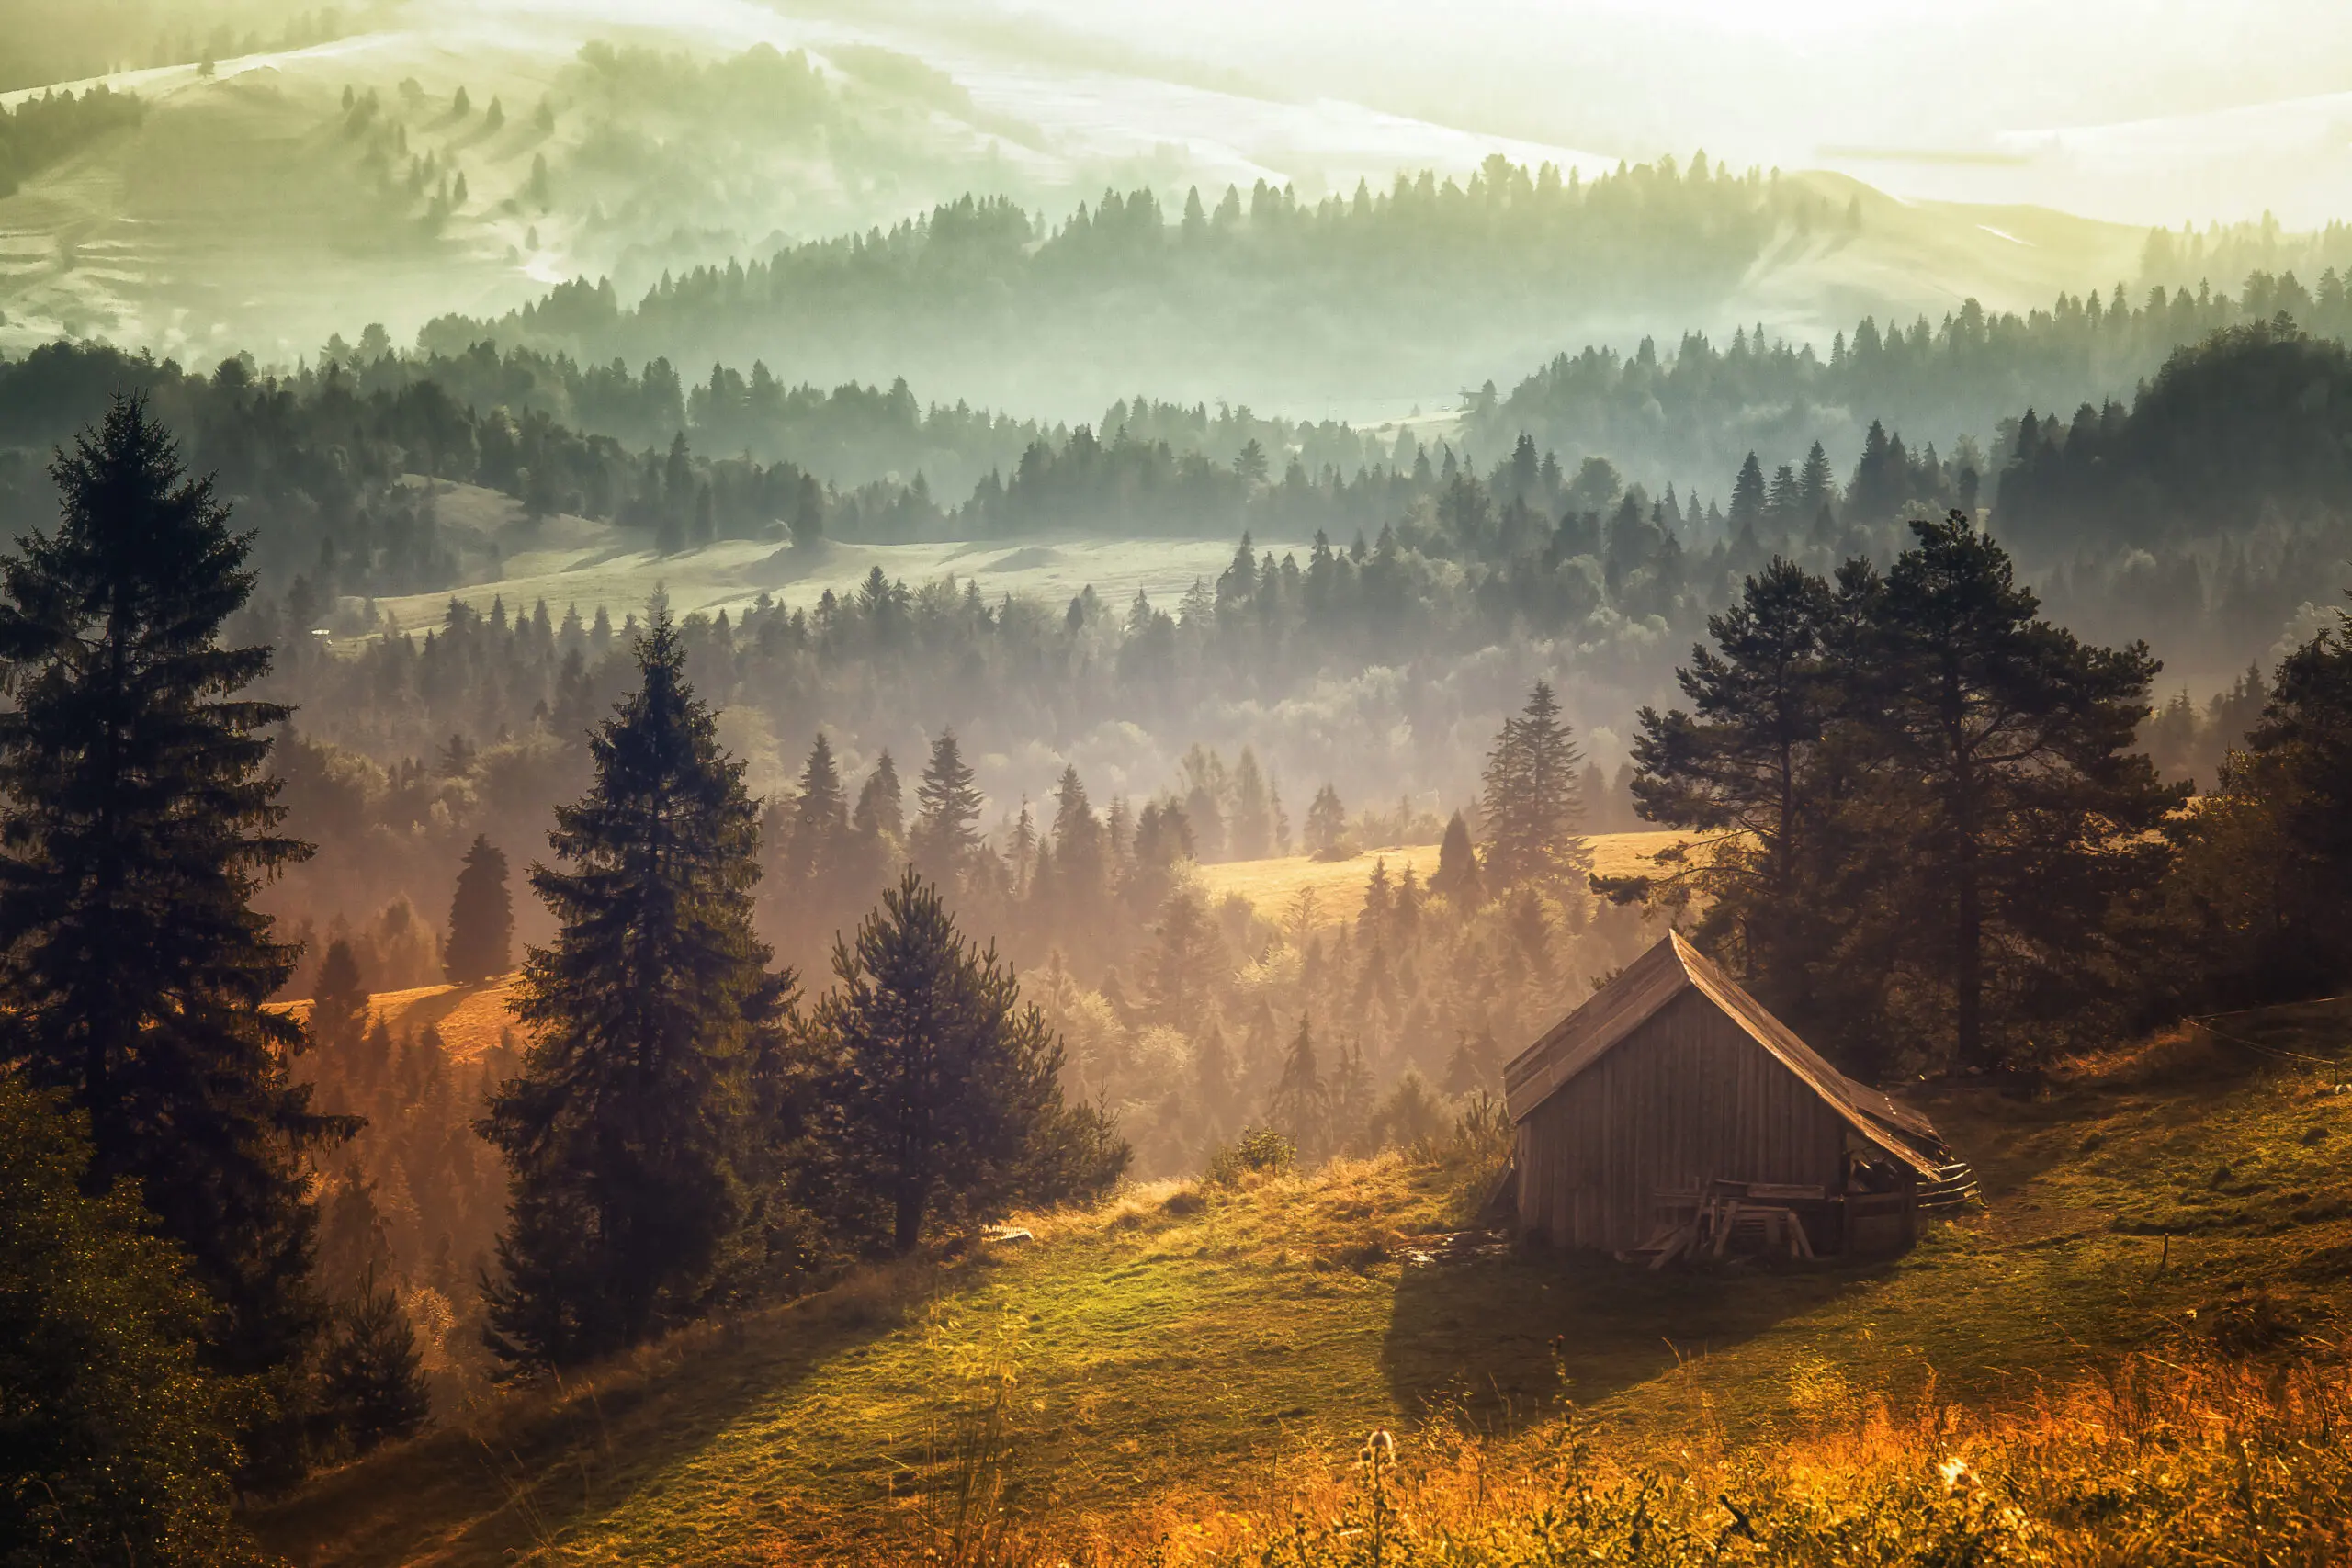 Wandbild (5235) Untitled by stanislav hricko präsentiert: Natur,Landschaften,Bäume,Sommer,Wälder,Berge,Herbst